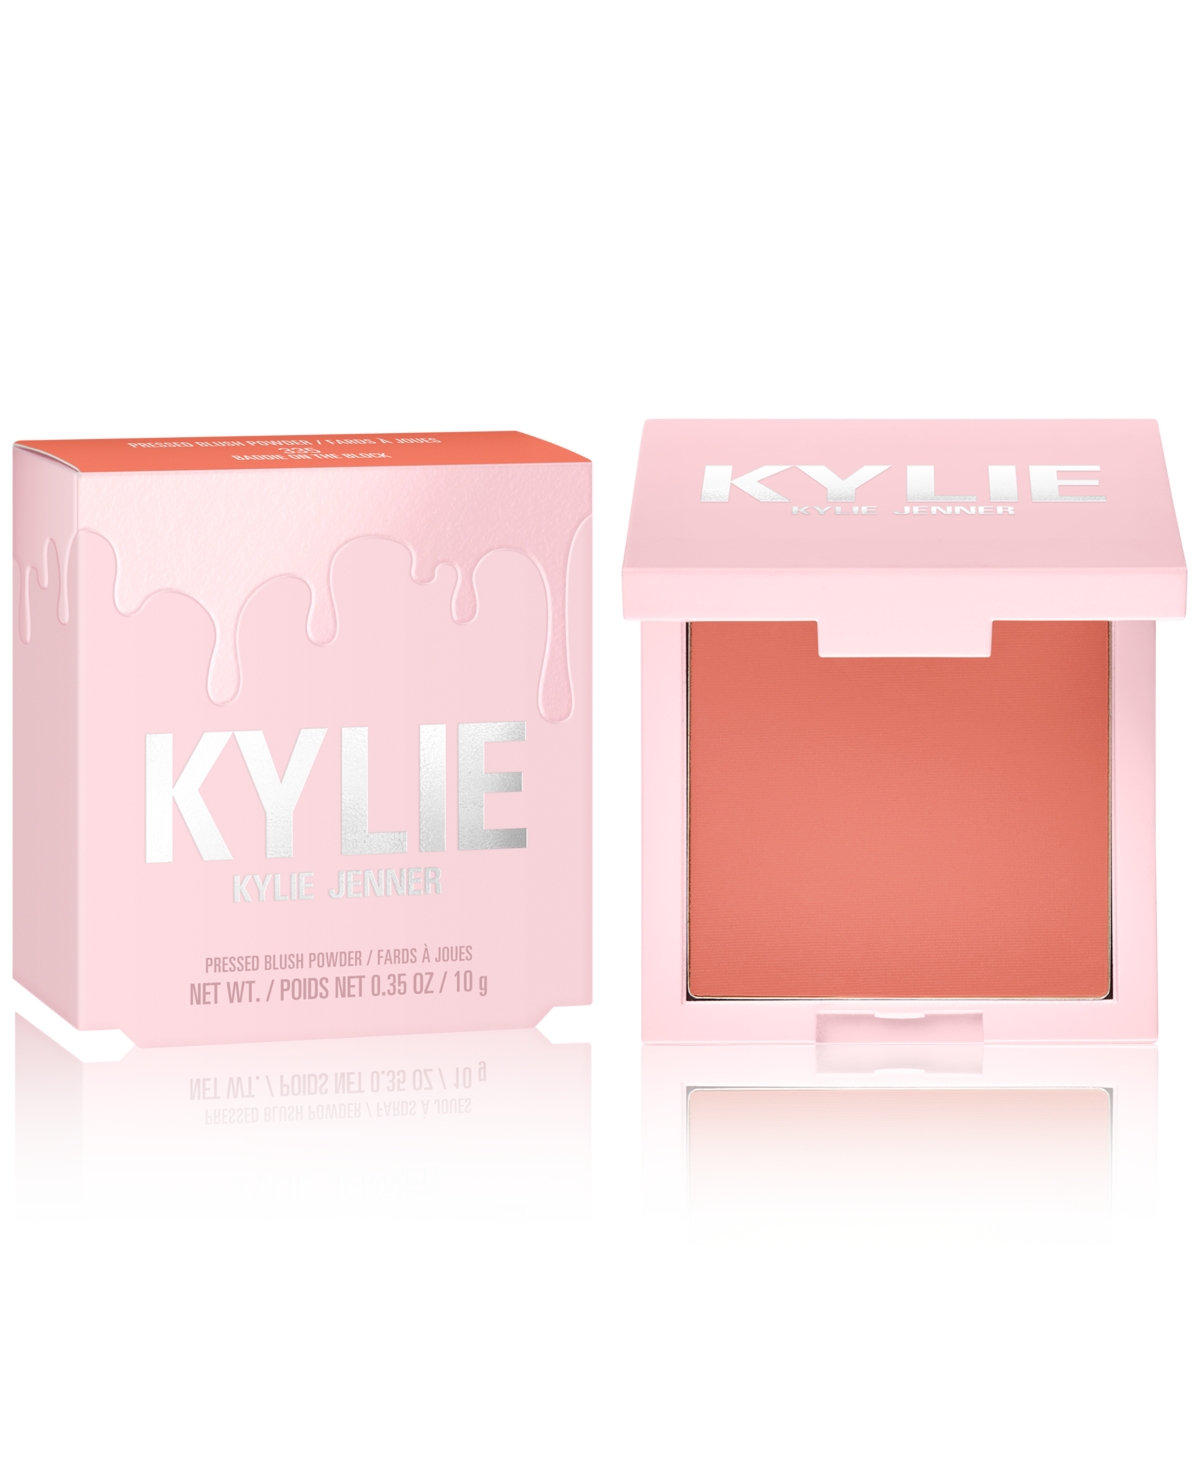 Kylie Cosmetics Pressed Blush Powder In Baddie On The Block